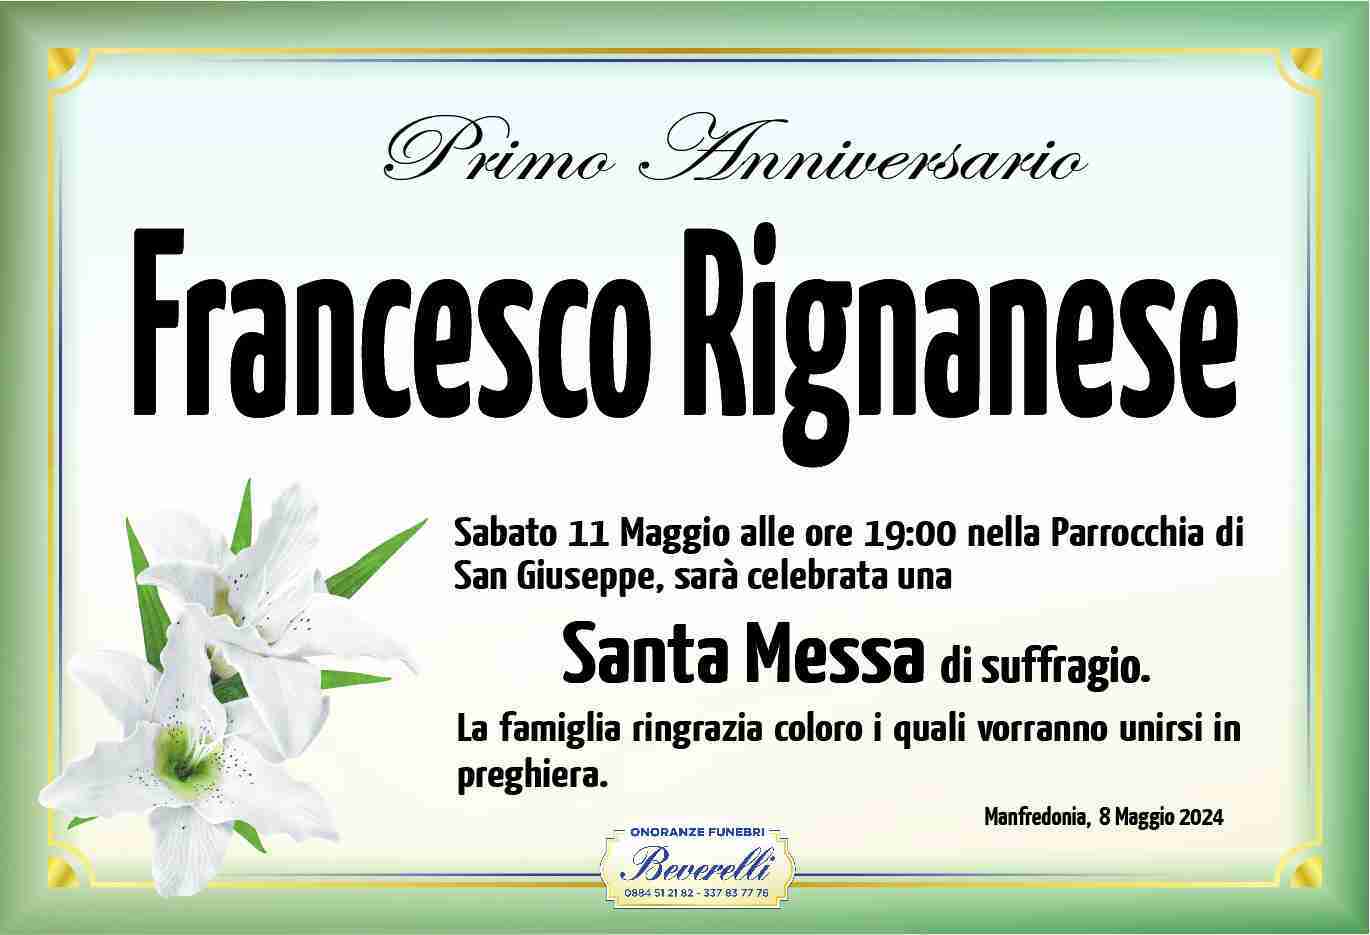 Francesco Rignanese